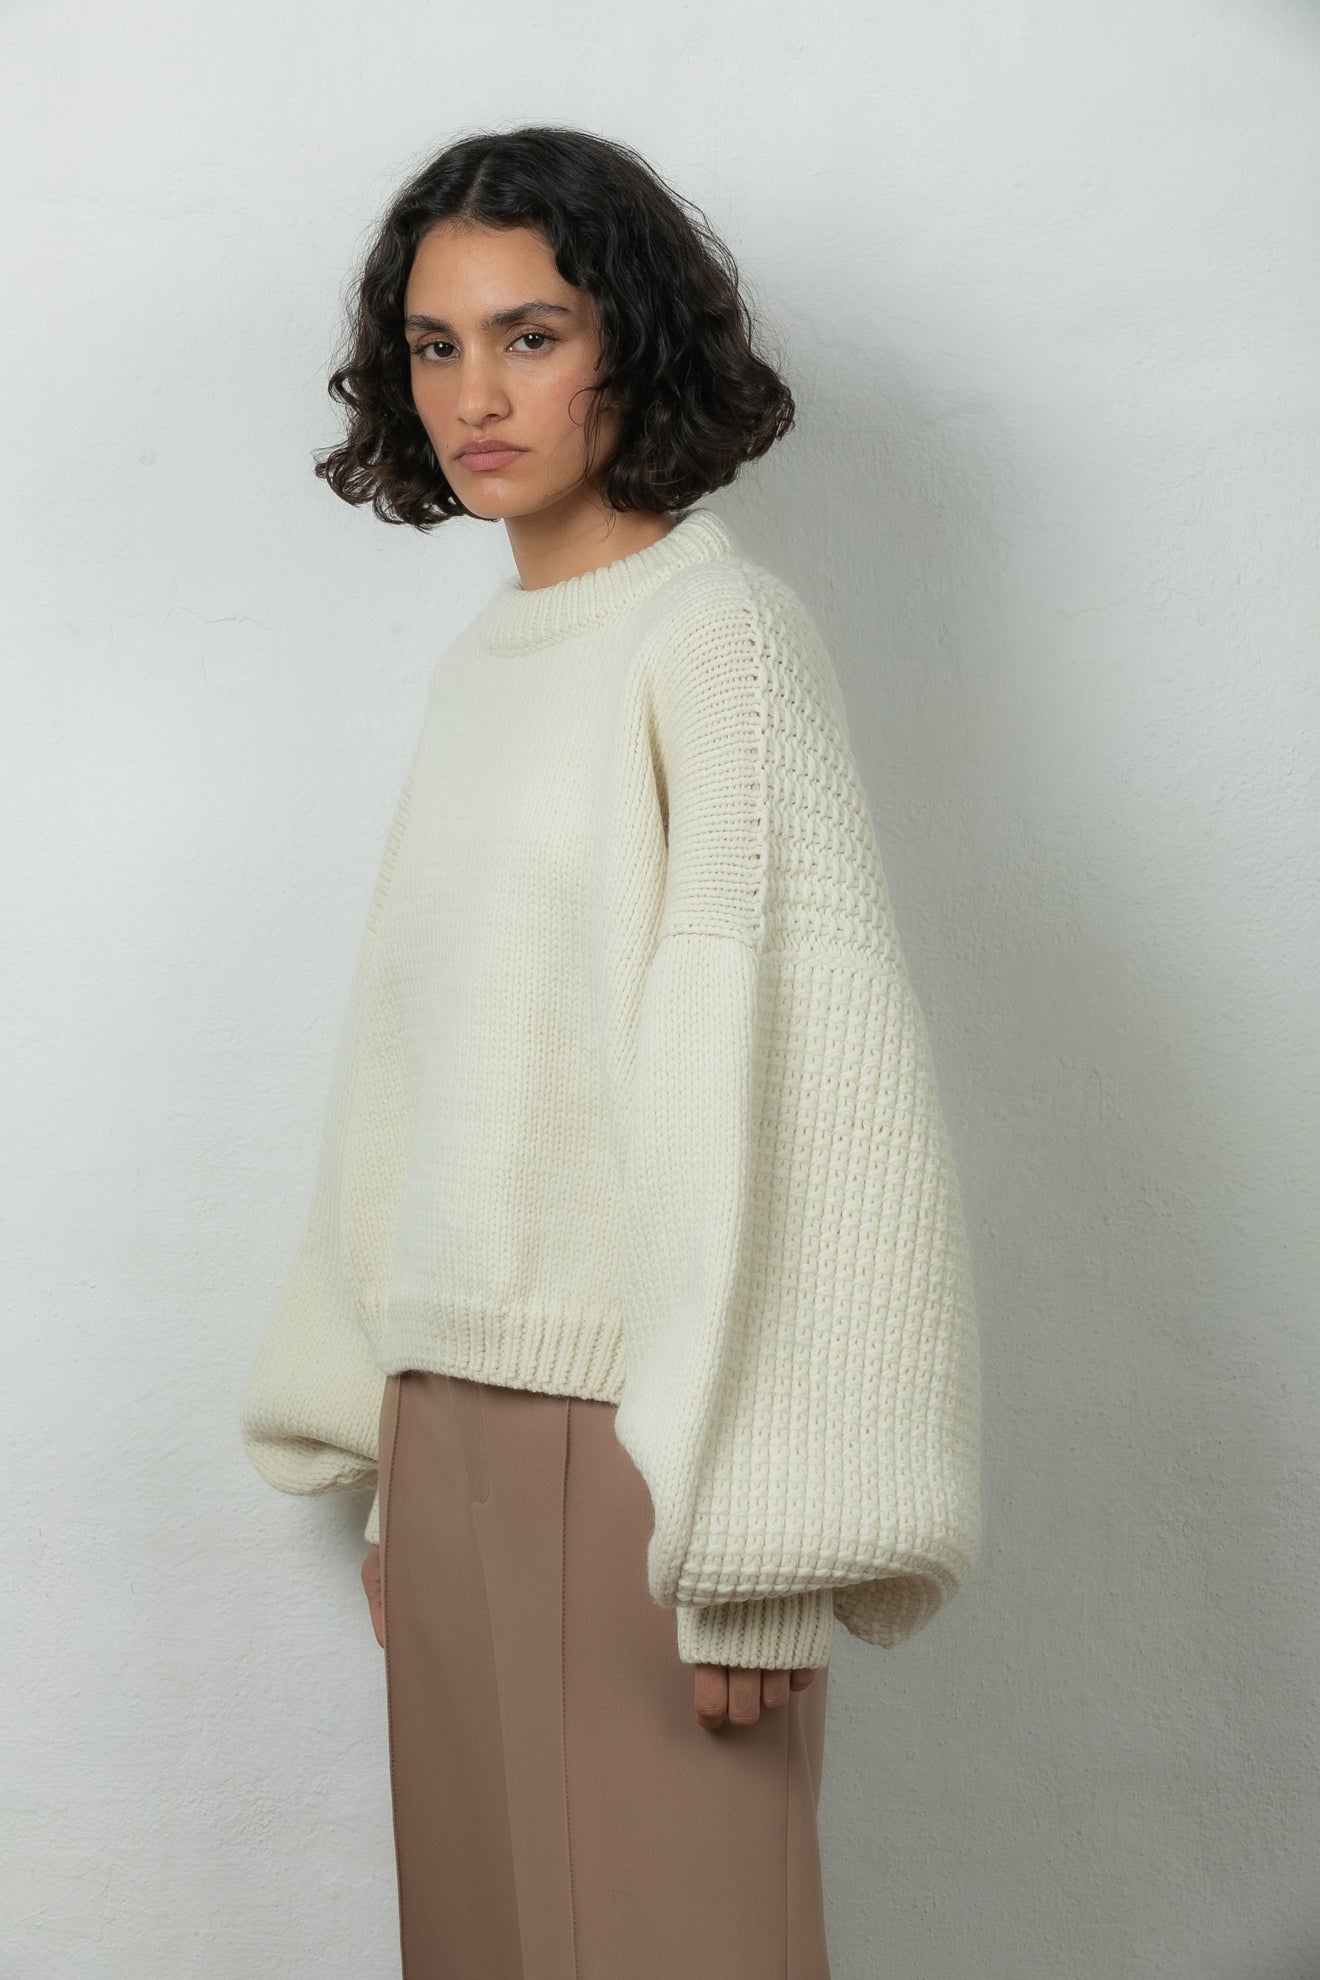 wool jumper sweater knit Mr Mittens winter ivory white cream